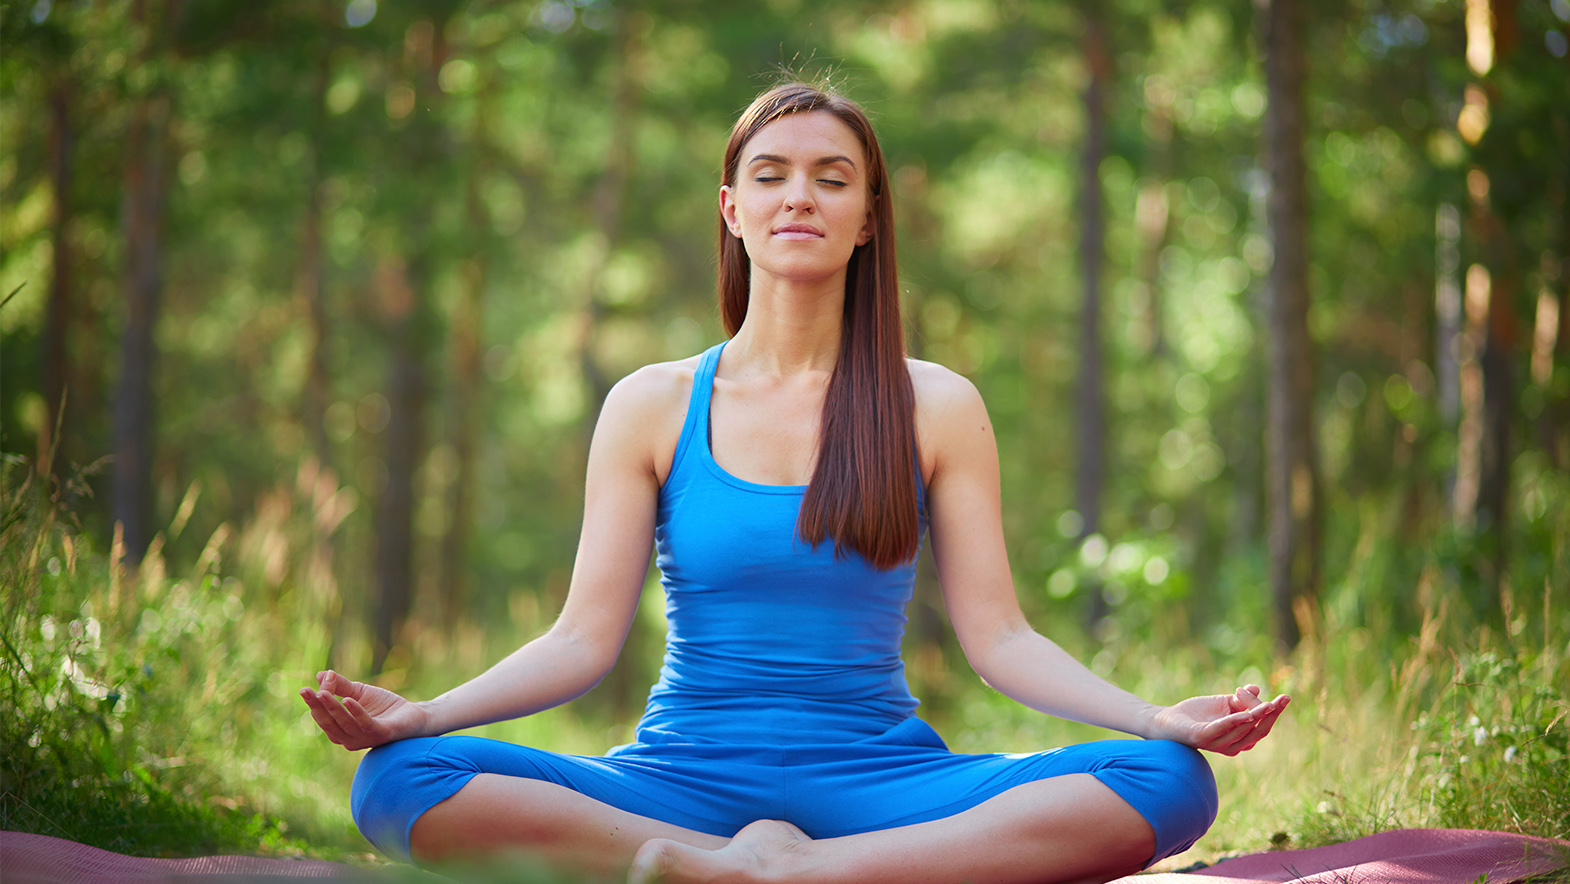 How to do Padmasana (Lotus Pose), its benefits & contraindication